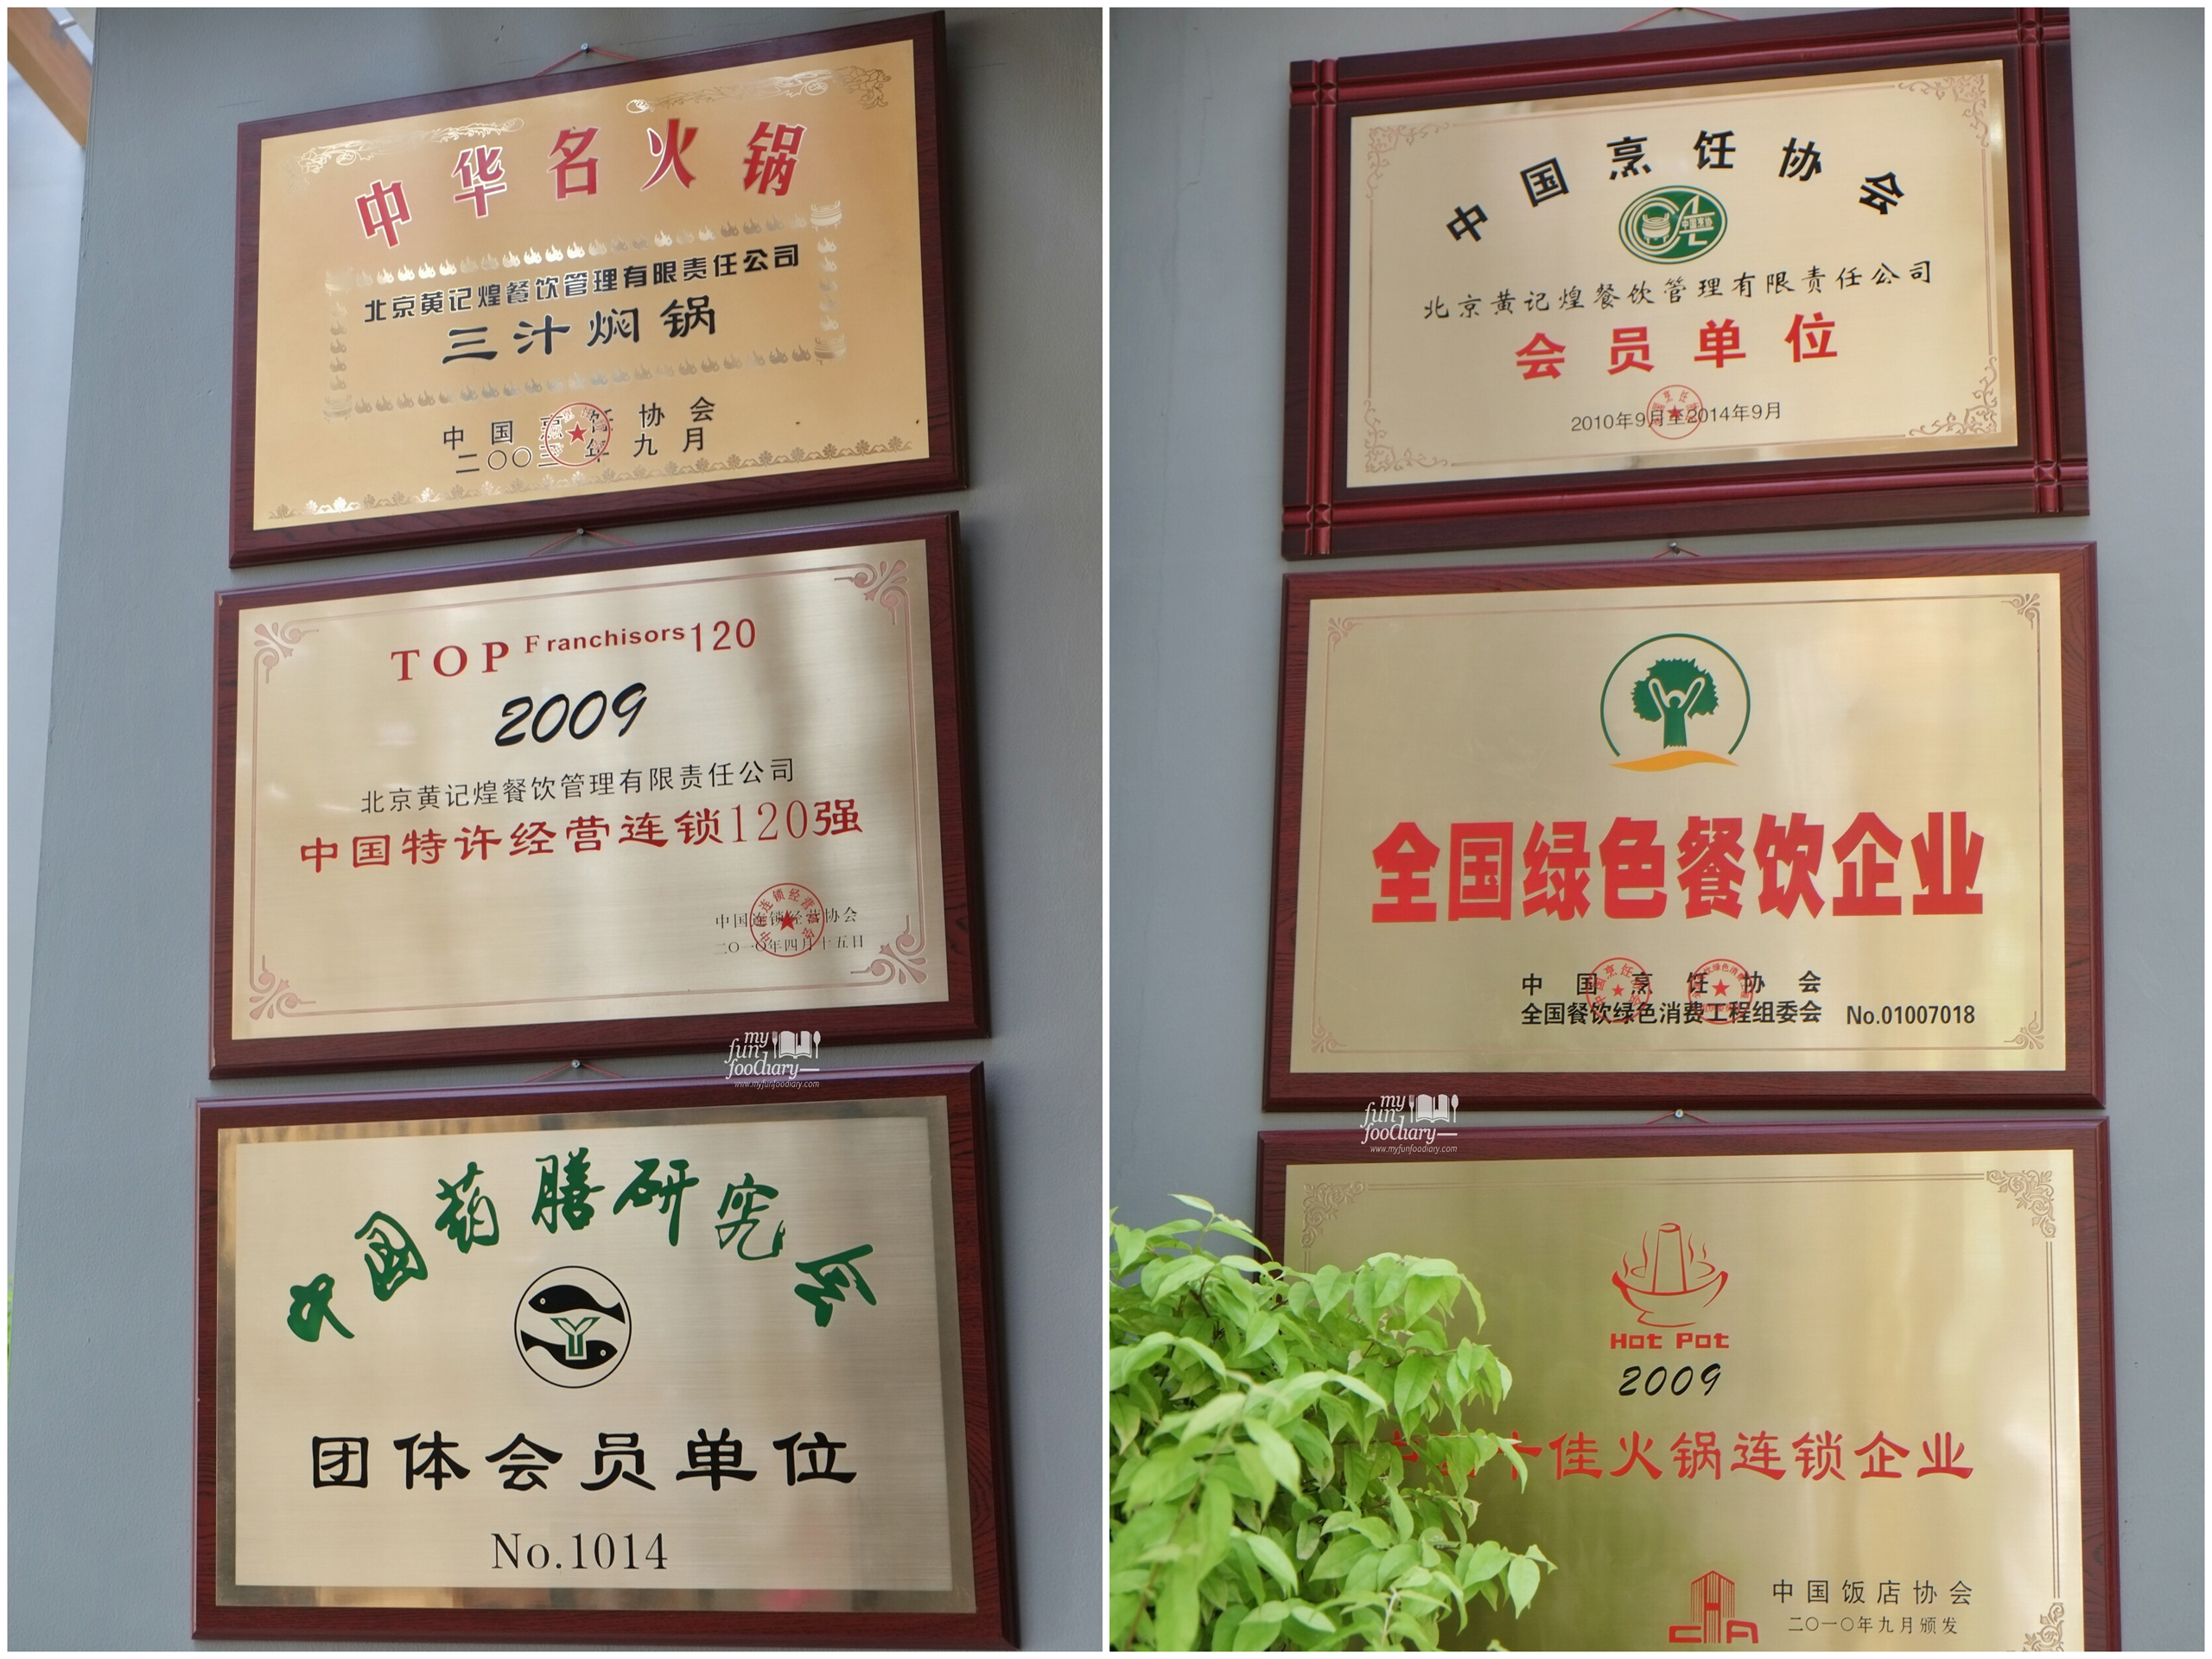 Certificates at Huang Ji Huang PIK by Myfunfoodiary 03